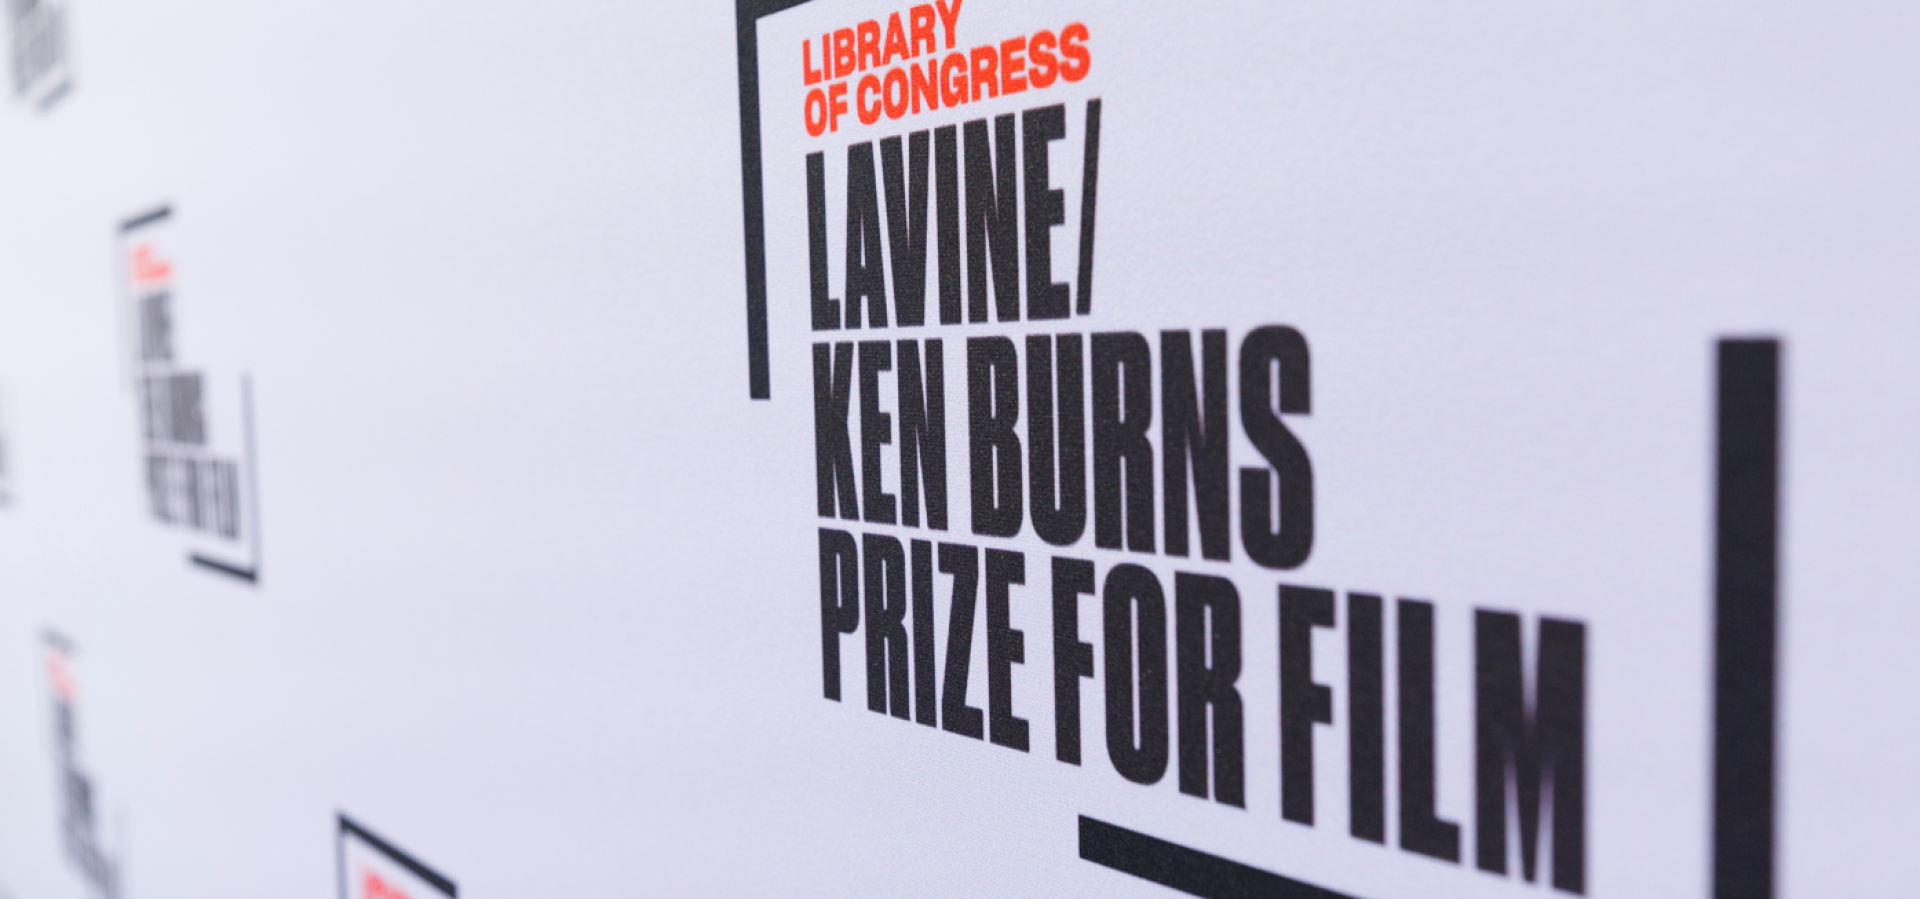 Library of Congress Lavine Ken Burns Prize for Film Film Grant